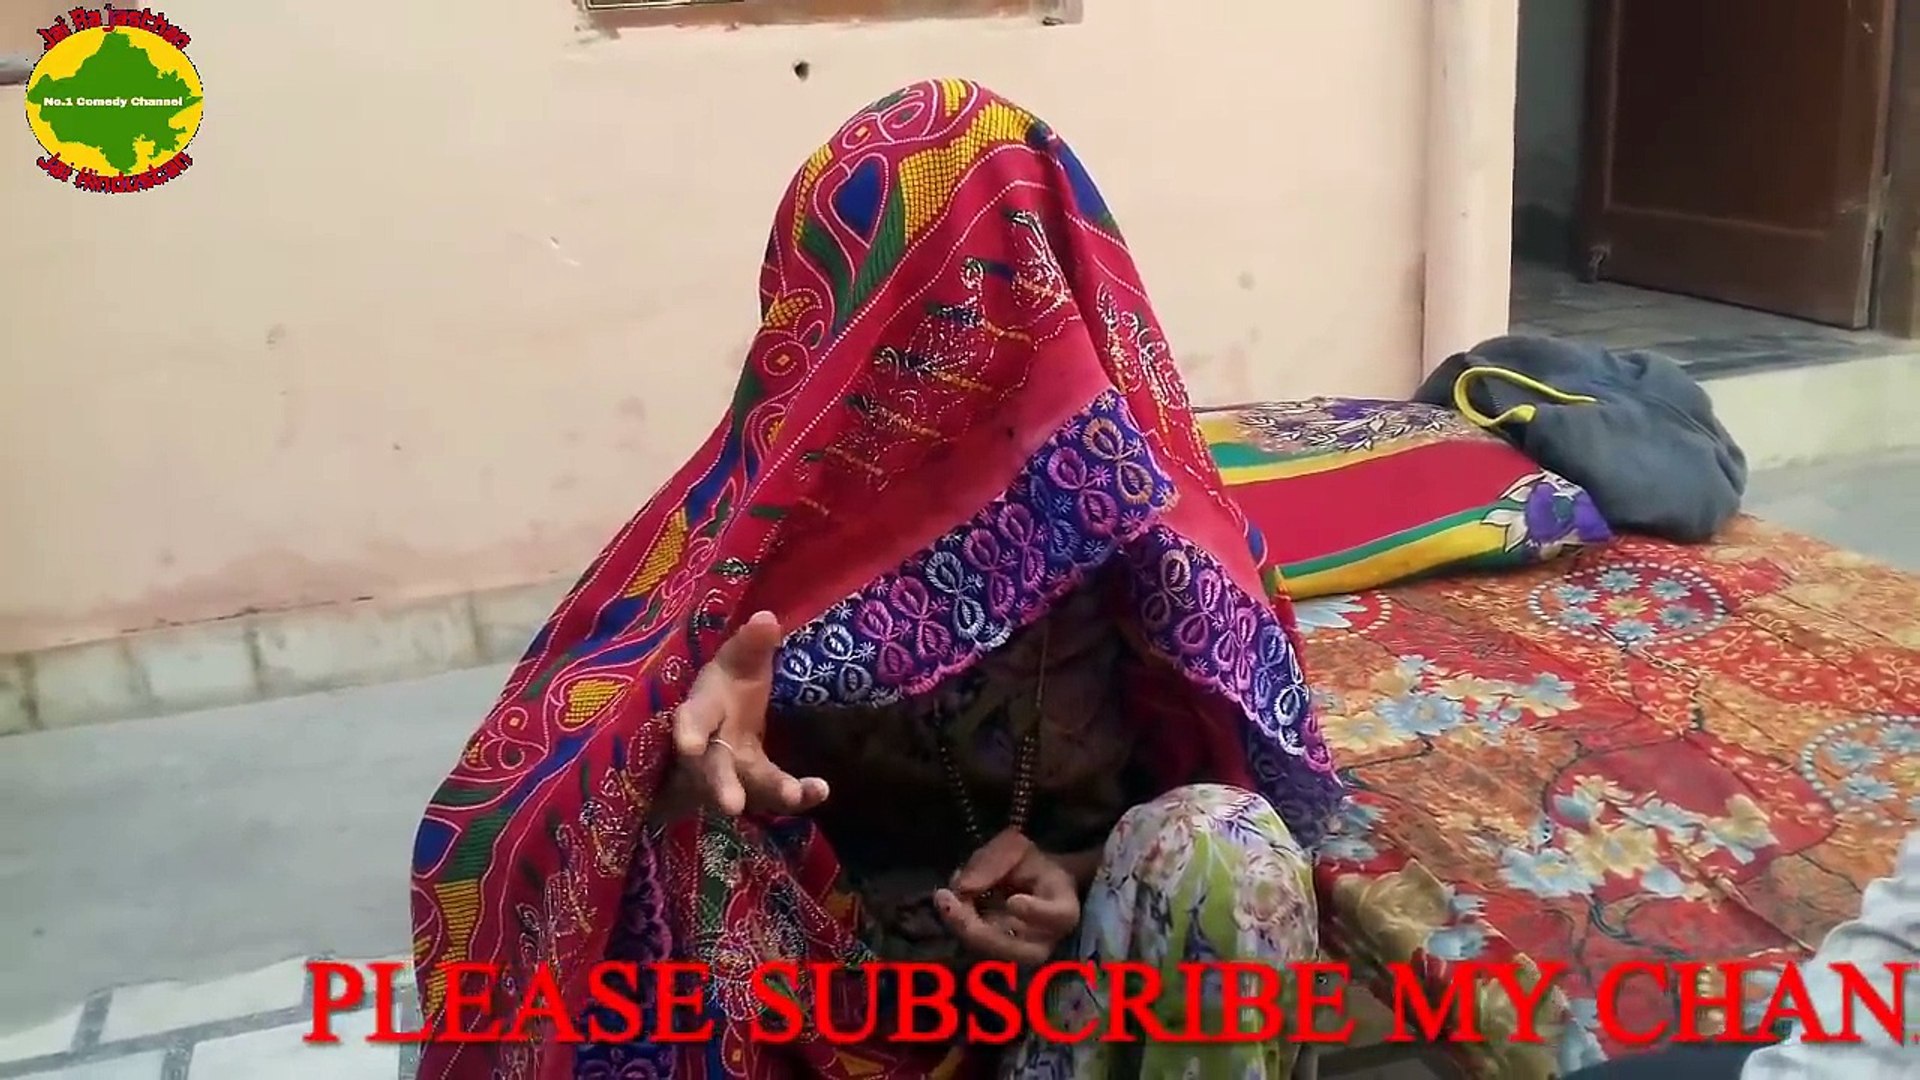 भोली लुगाई बेशर्म जंवाई शेखावाटी कॉमेडी राजस्थानी कॉमेडी murari lal sharma  comedy - فيديو Dailymotion